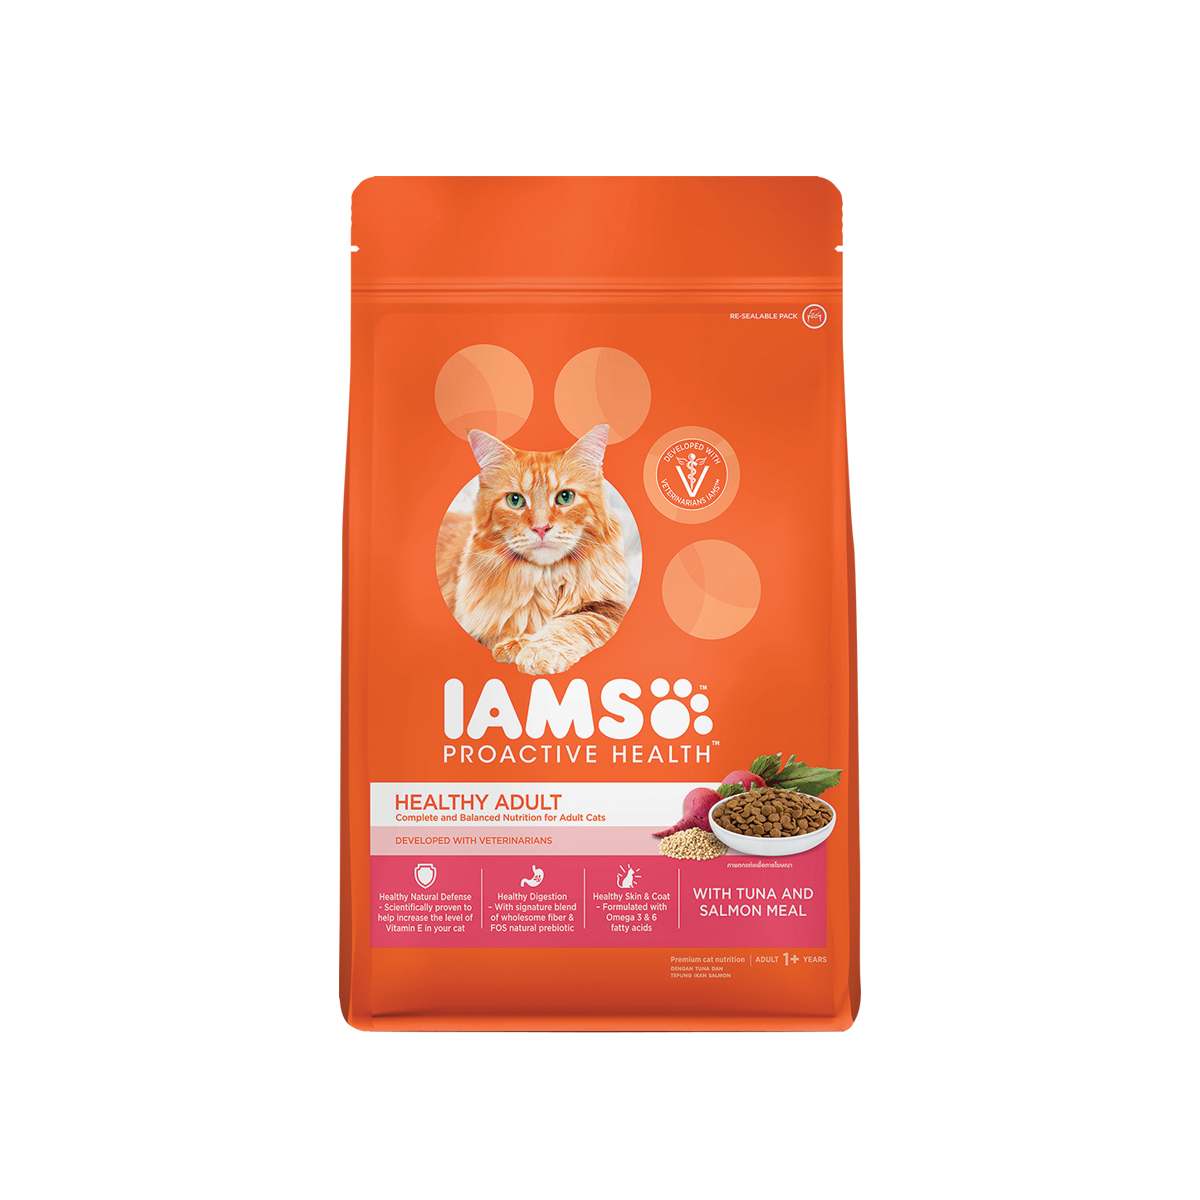 IAMS Proactive Health Healthy Adult with Tuna and Salmon Meal ไอแอมส์ โปรแอคทีฟ อาหารแมว สำหรับแมวโต รสทูน่าและแซลมอน